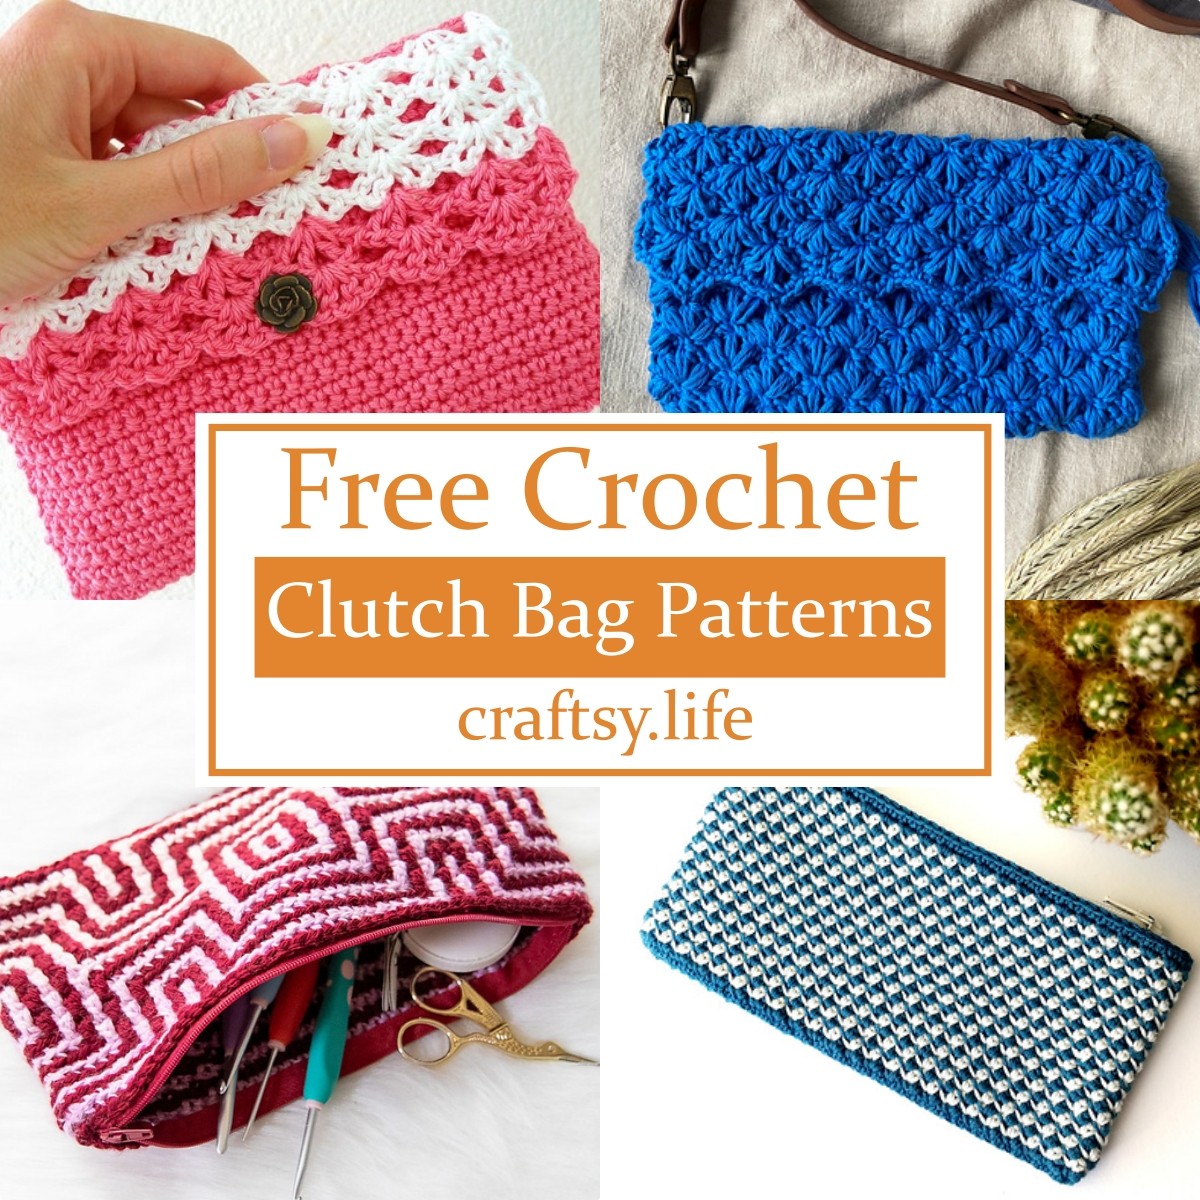 5 Free Crochet Clutch Bag Patterns